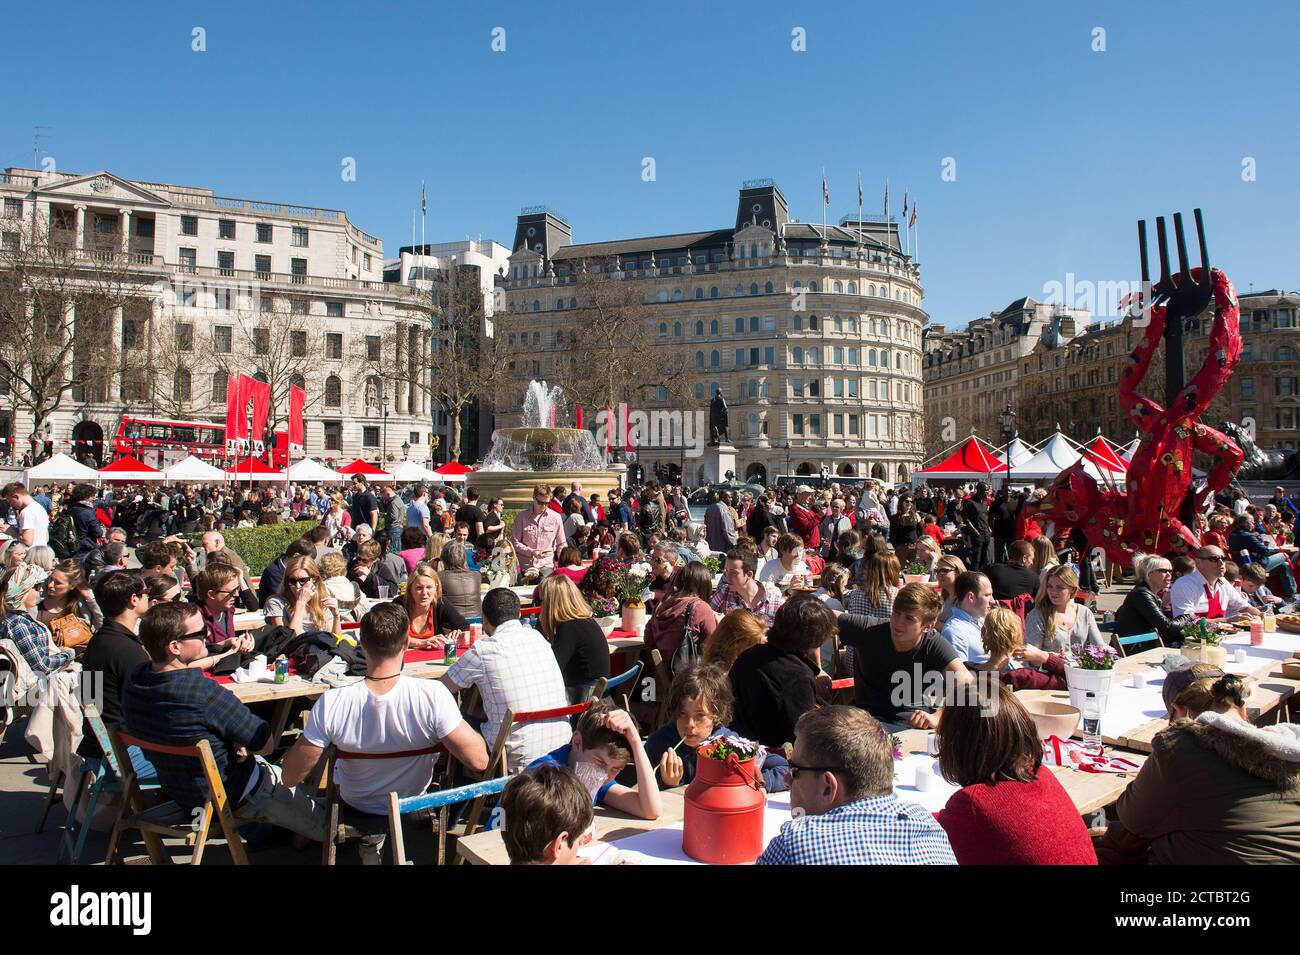 La gente asiste a la fiesta anual de San Jorge en Trafalgar Square, Londres, Inglaterra. Foto de stock